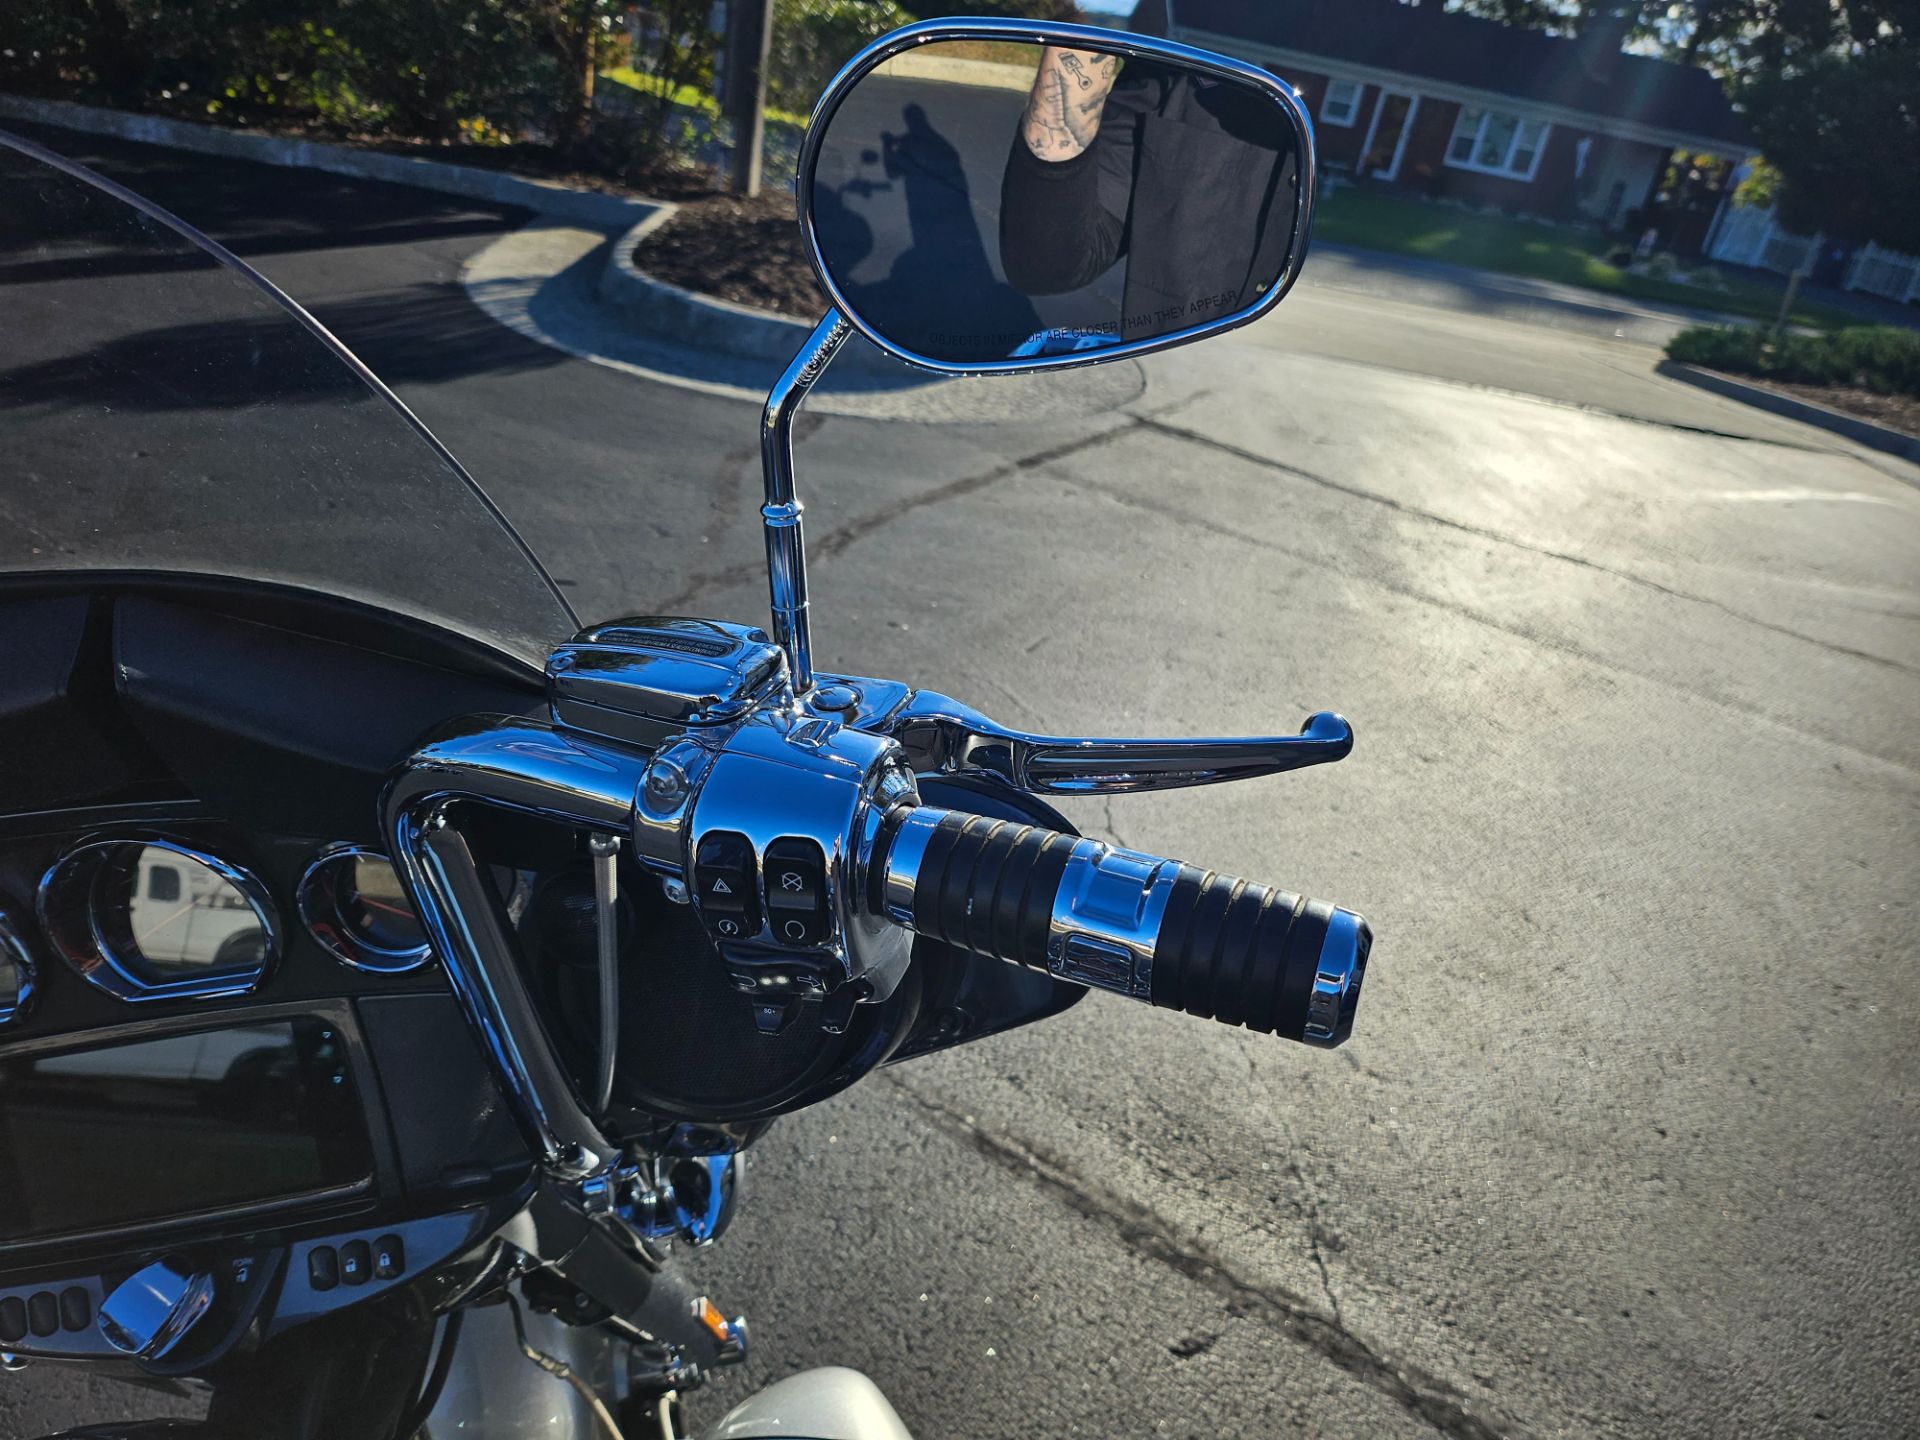 2019 Harley-Davidson CVO™ Street Glide® in Lynchburg, Virginia - Photo 38